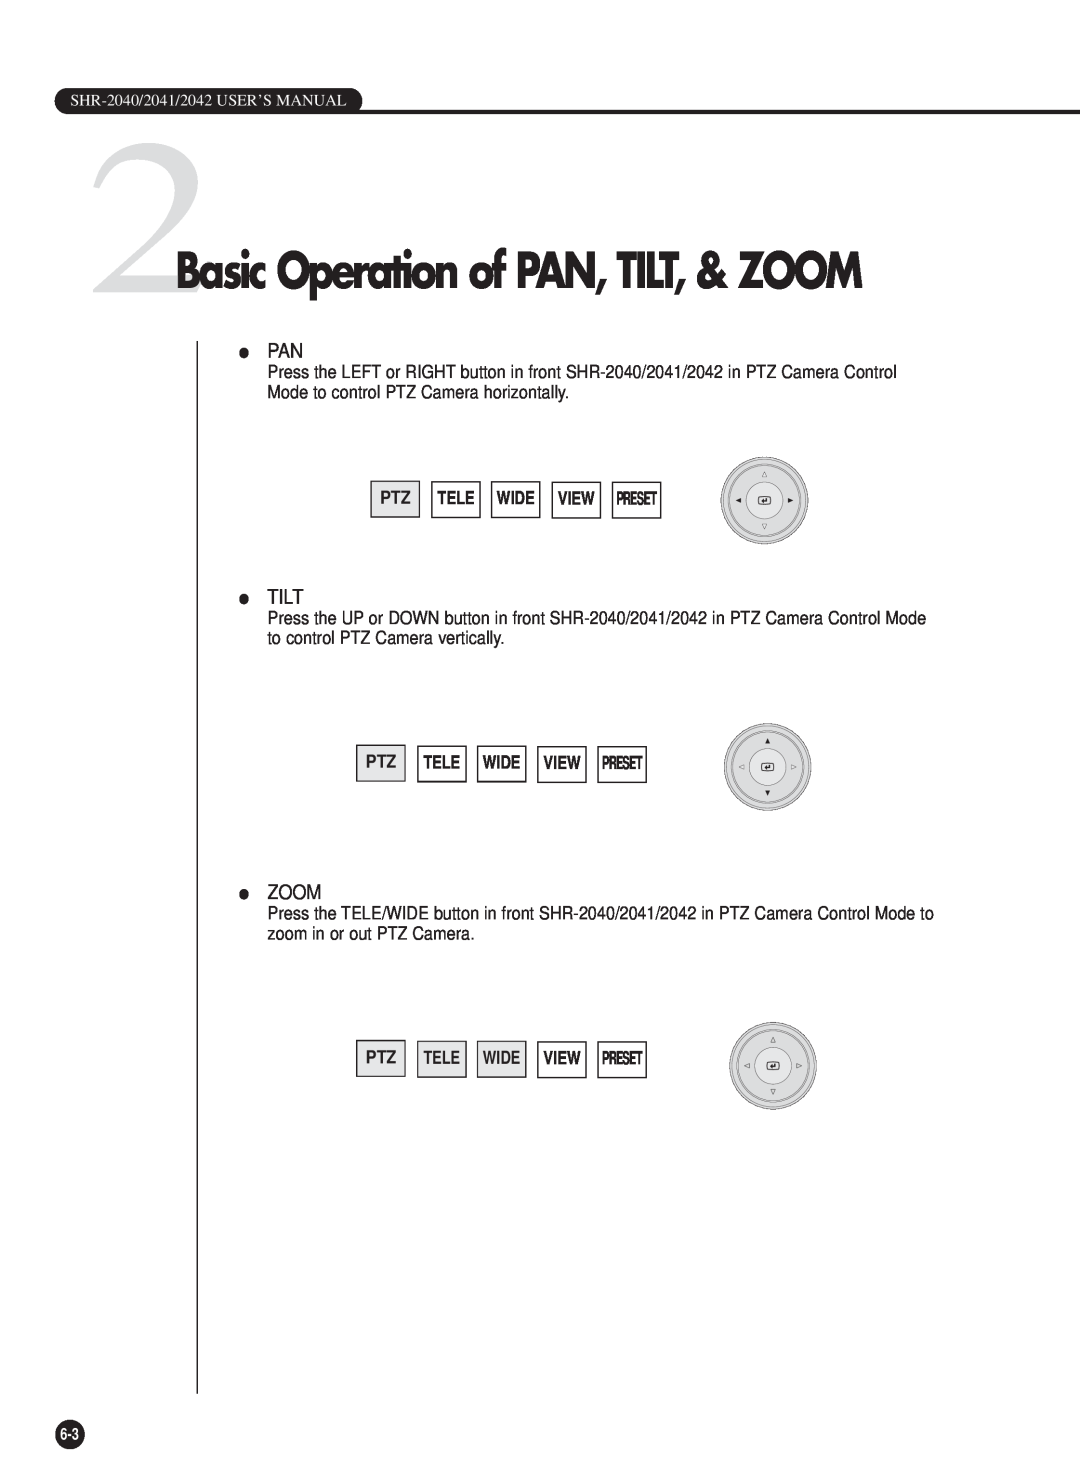 Samsung SHR-2040PX, SHR-2040P/GAR, SHR-2042P, SHR-2040P/XEC 2Basic Operation of PAN, TILT, & ZOOM, Tele Wide View Preset 